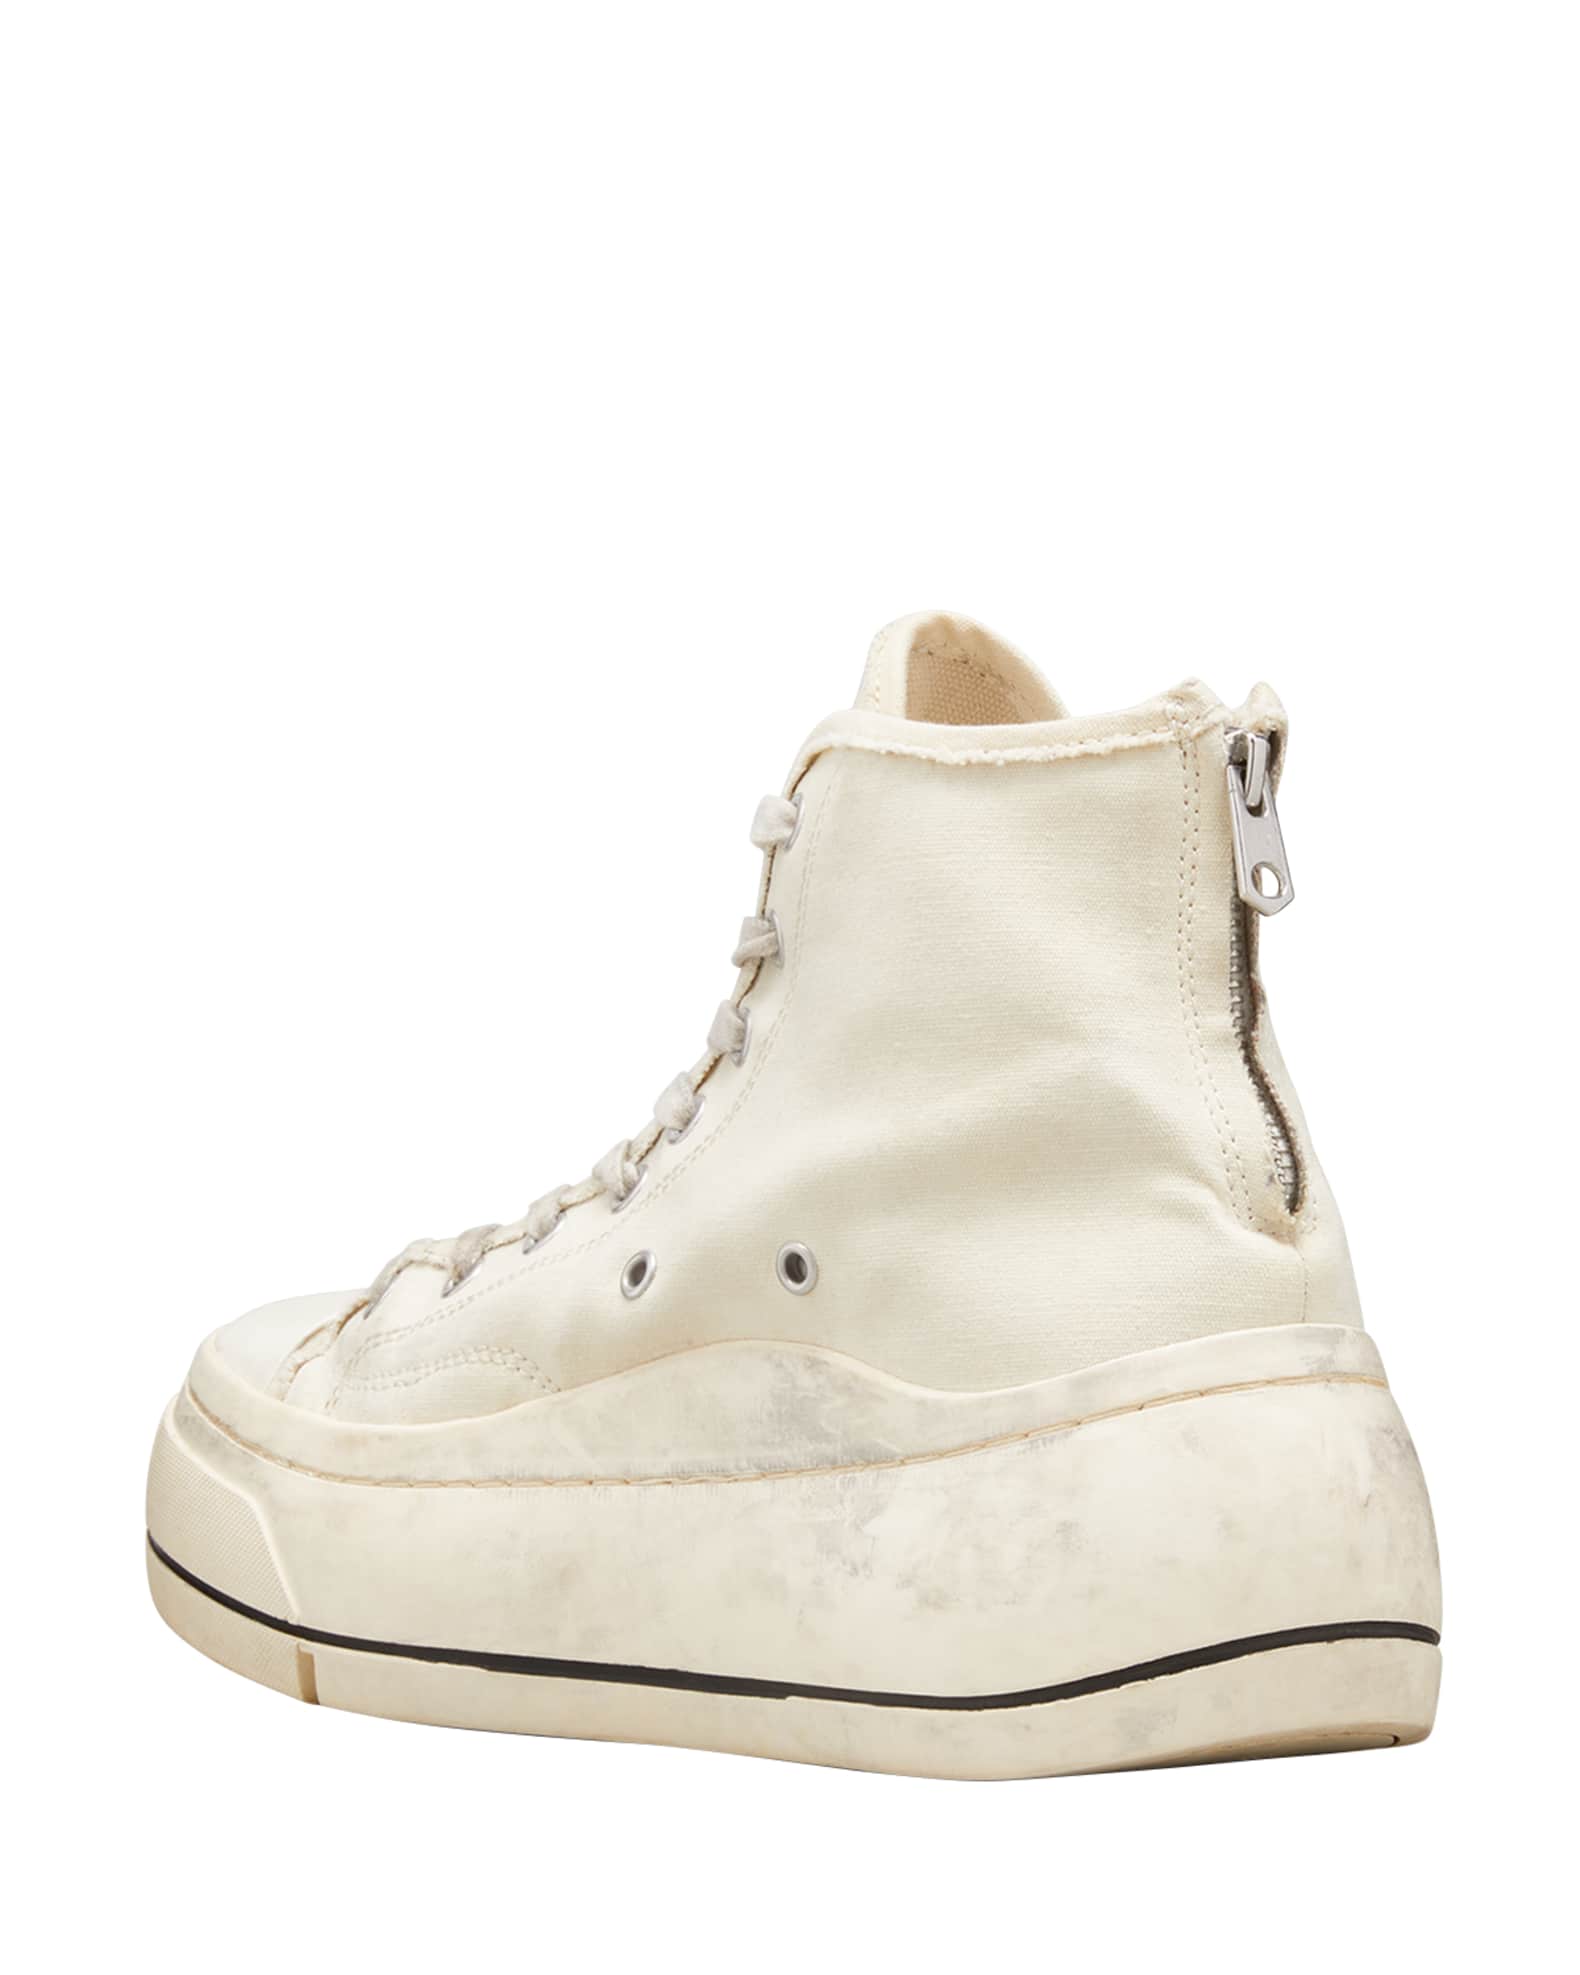 R13 Worn Canvas High-Top Platform Sneakers | Neiman Marcus